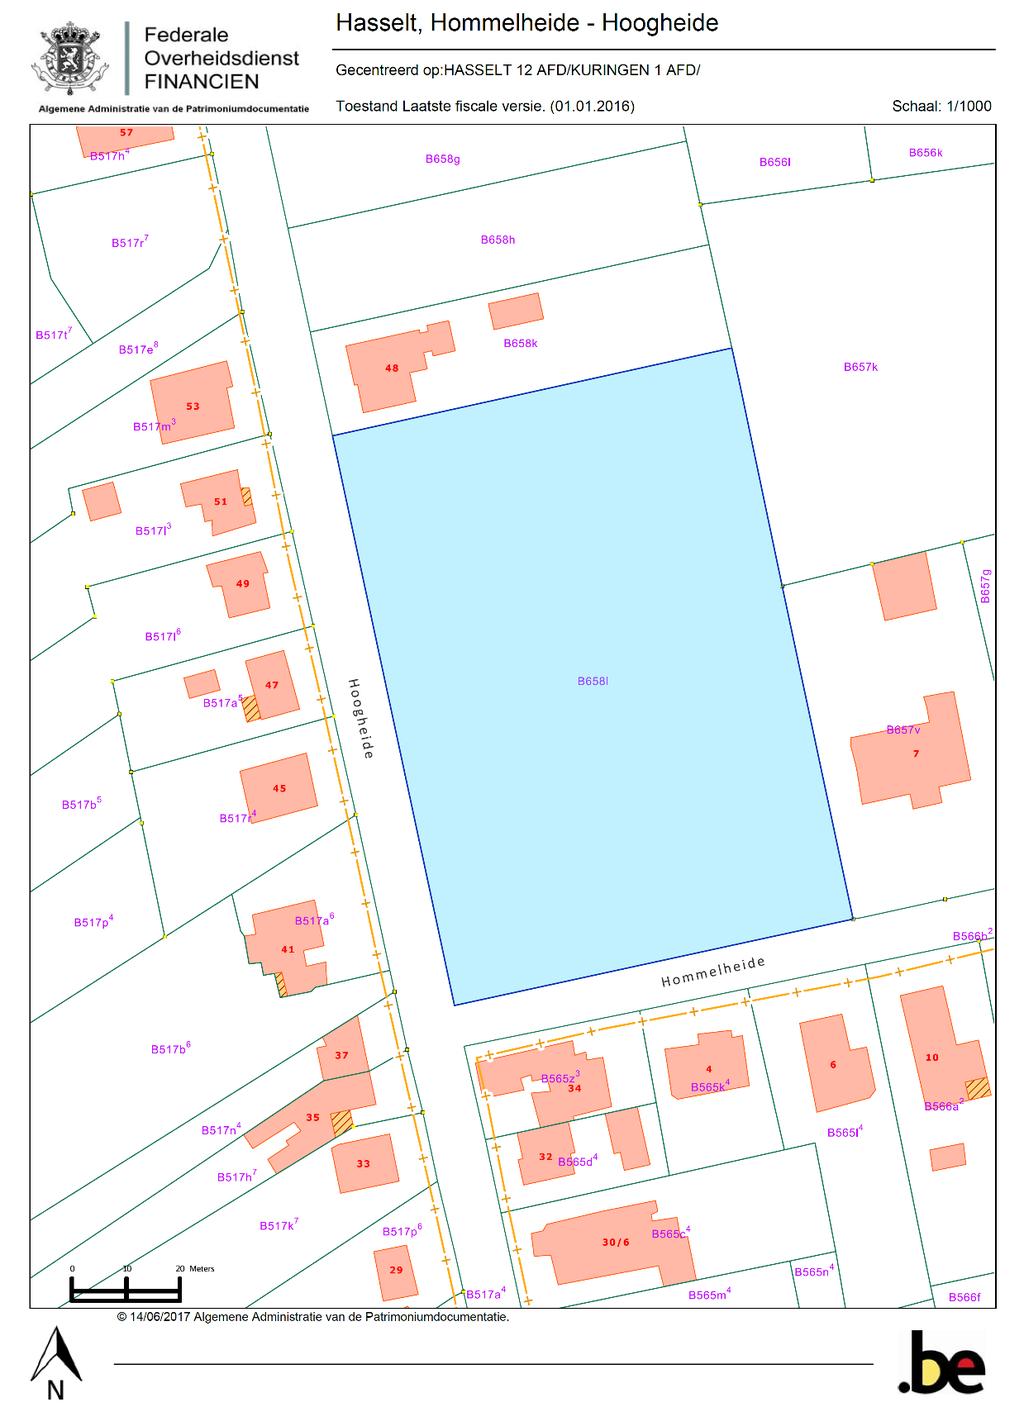 Kadastrale gegevens en plan met afbakening Kadastrale ligging van het projectgebied: Hasselt, afd 12 (Kuringen), Sectie B, perceel 655L, gekadastreerde oppervlakte: